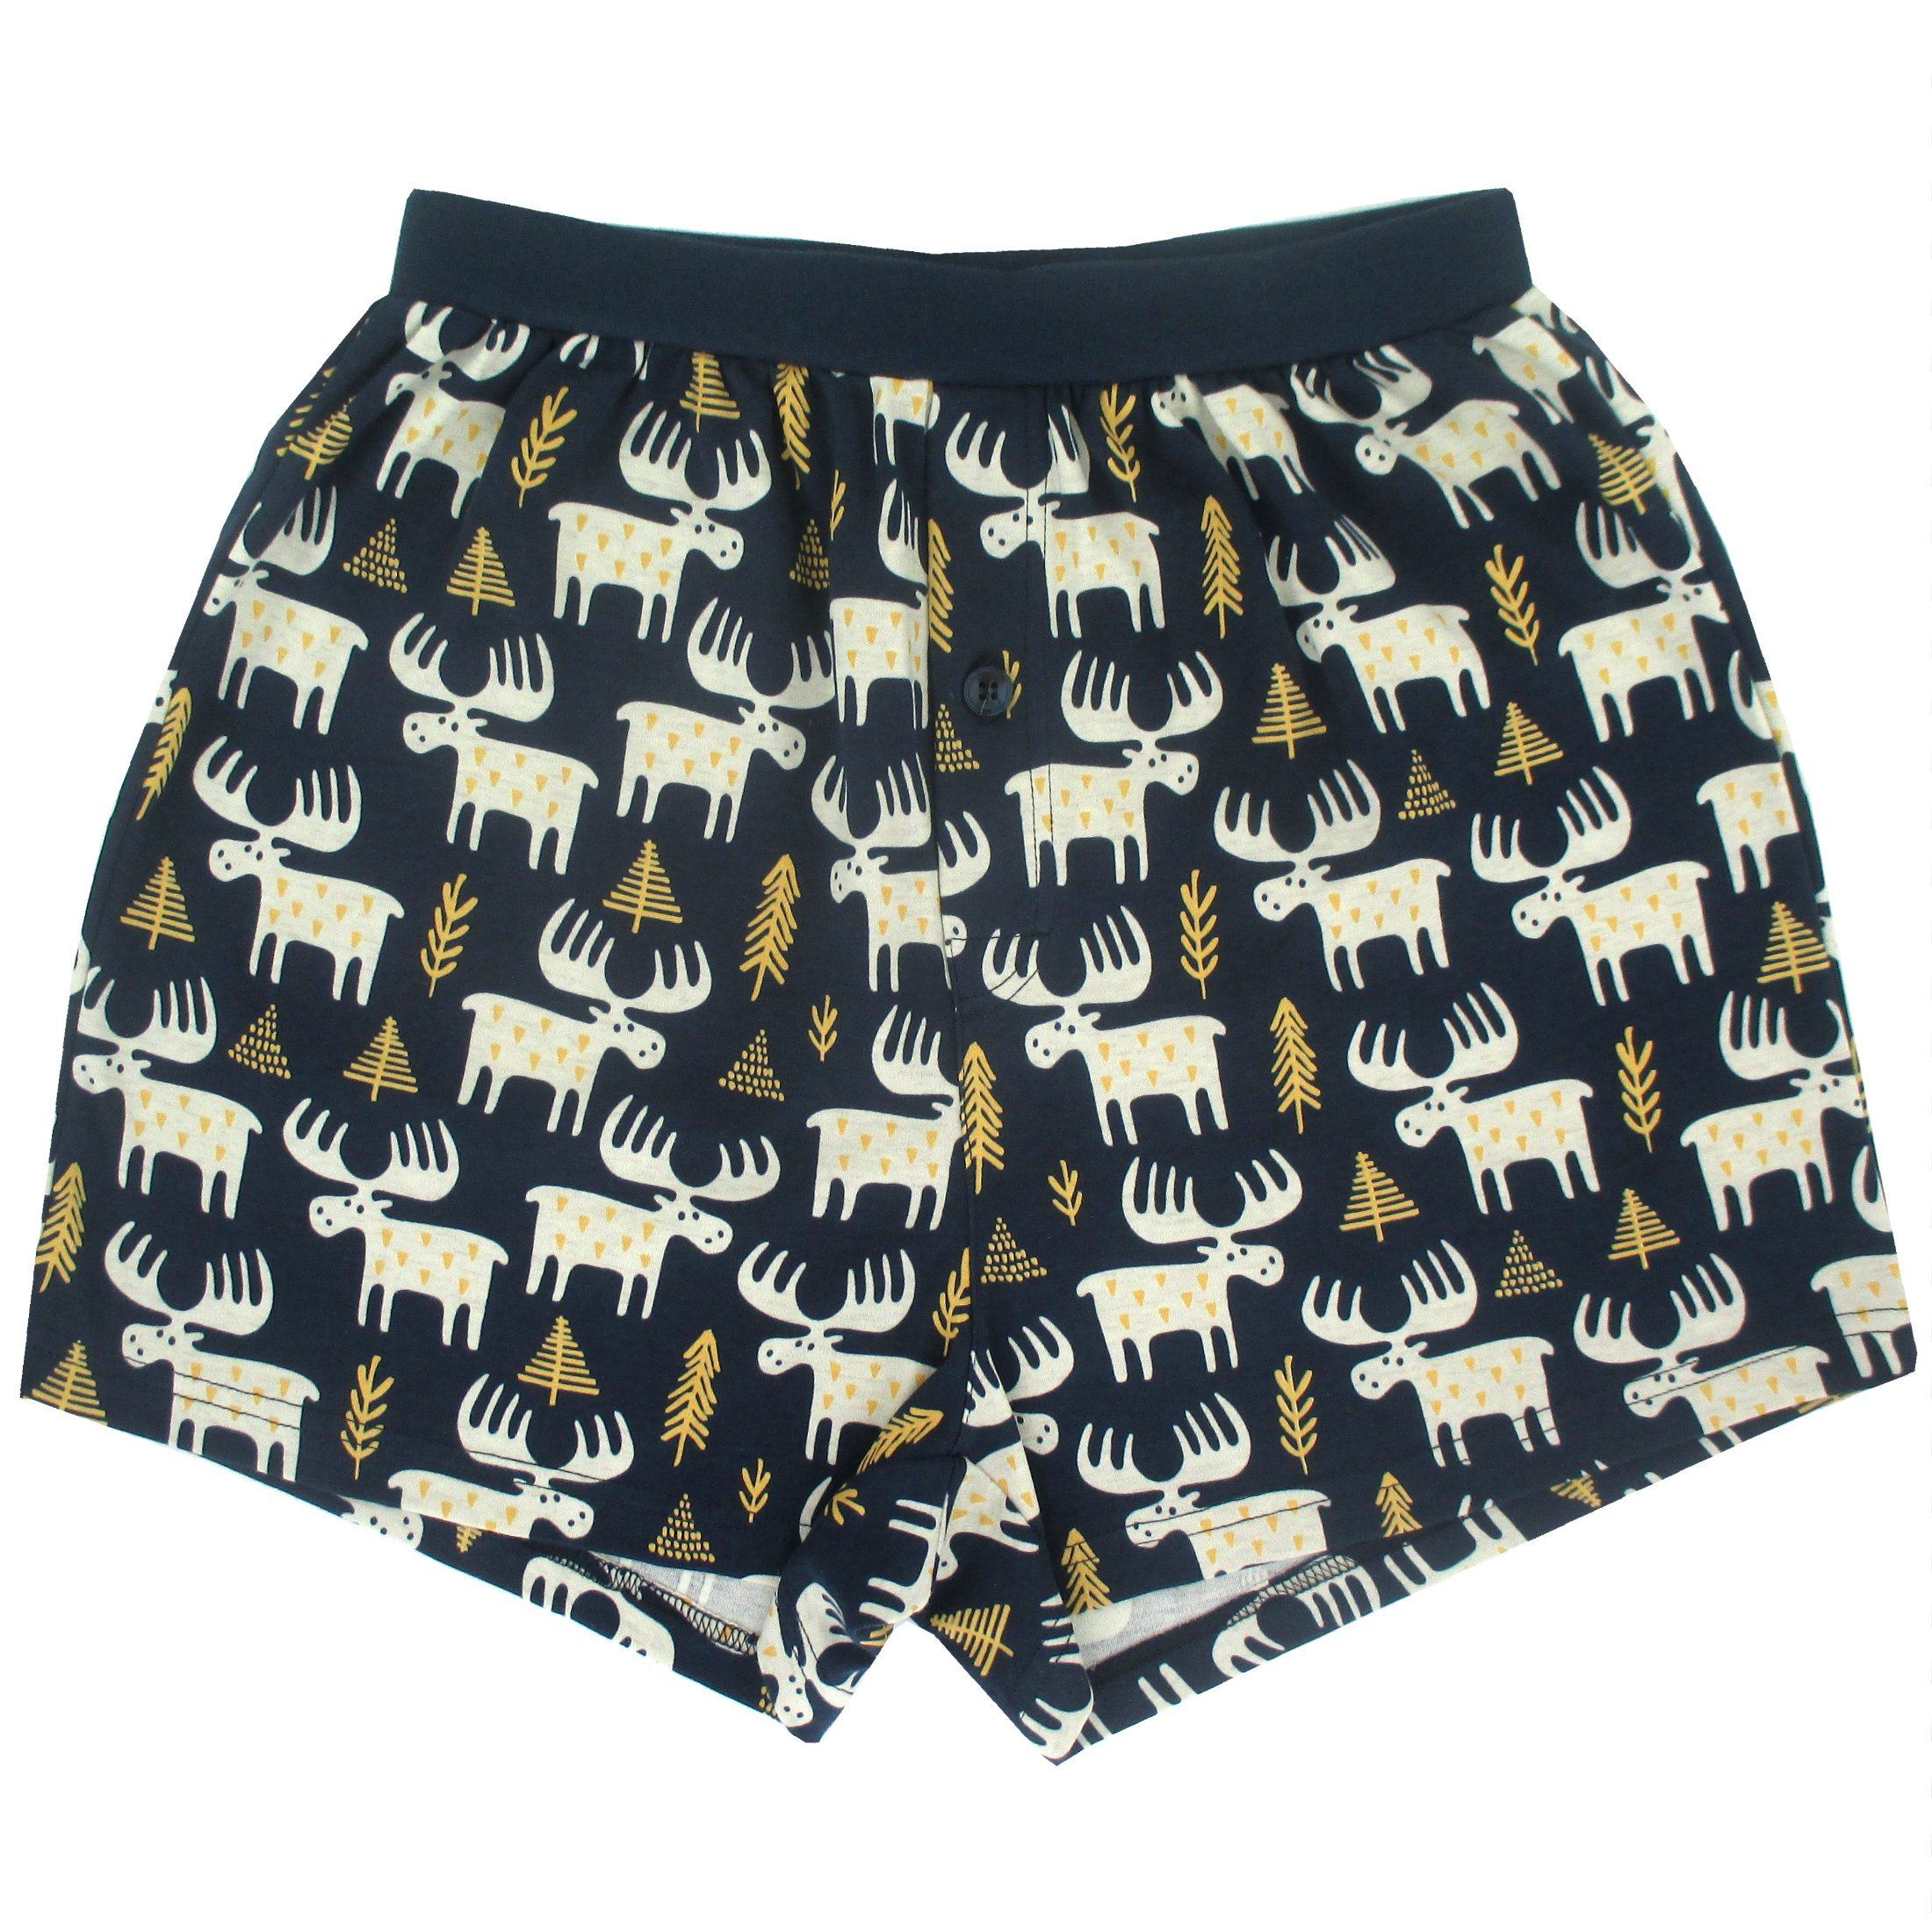 Outdoorsy Moose Underwear. Buy Men's Moose Patterned Boxer Shorts Here